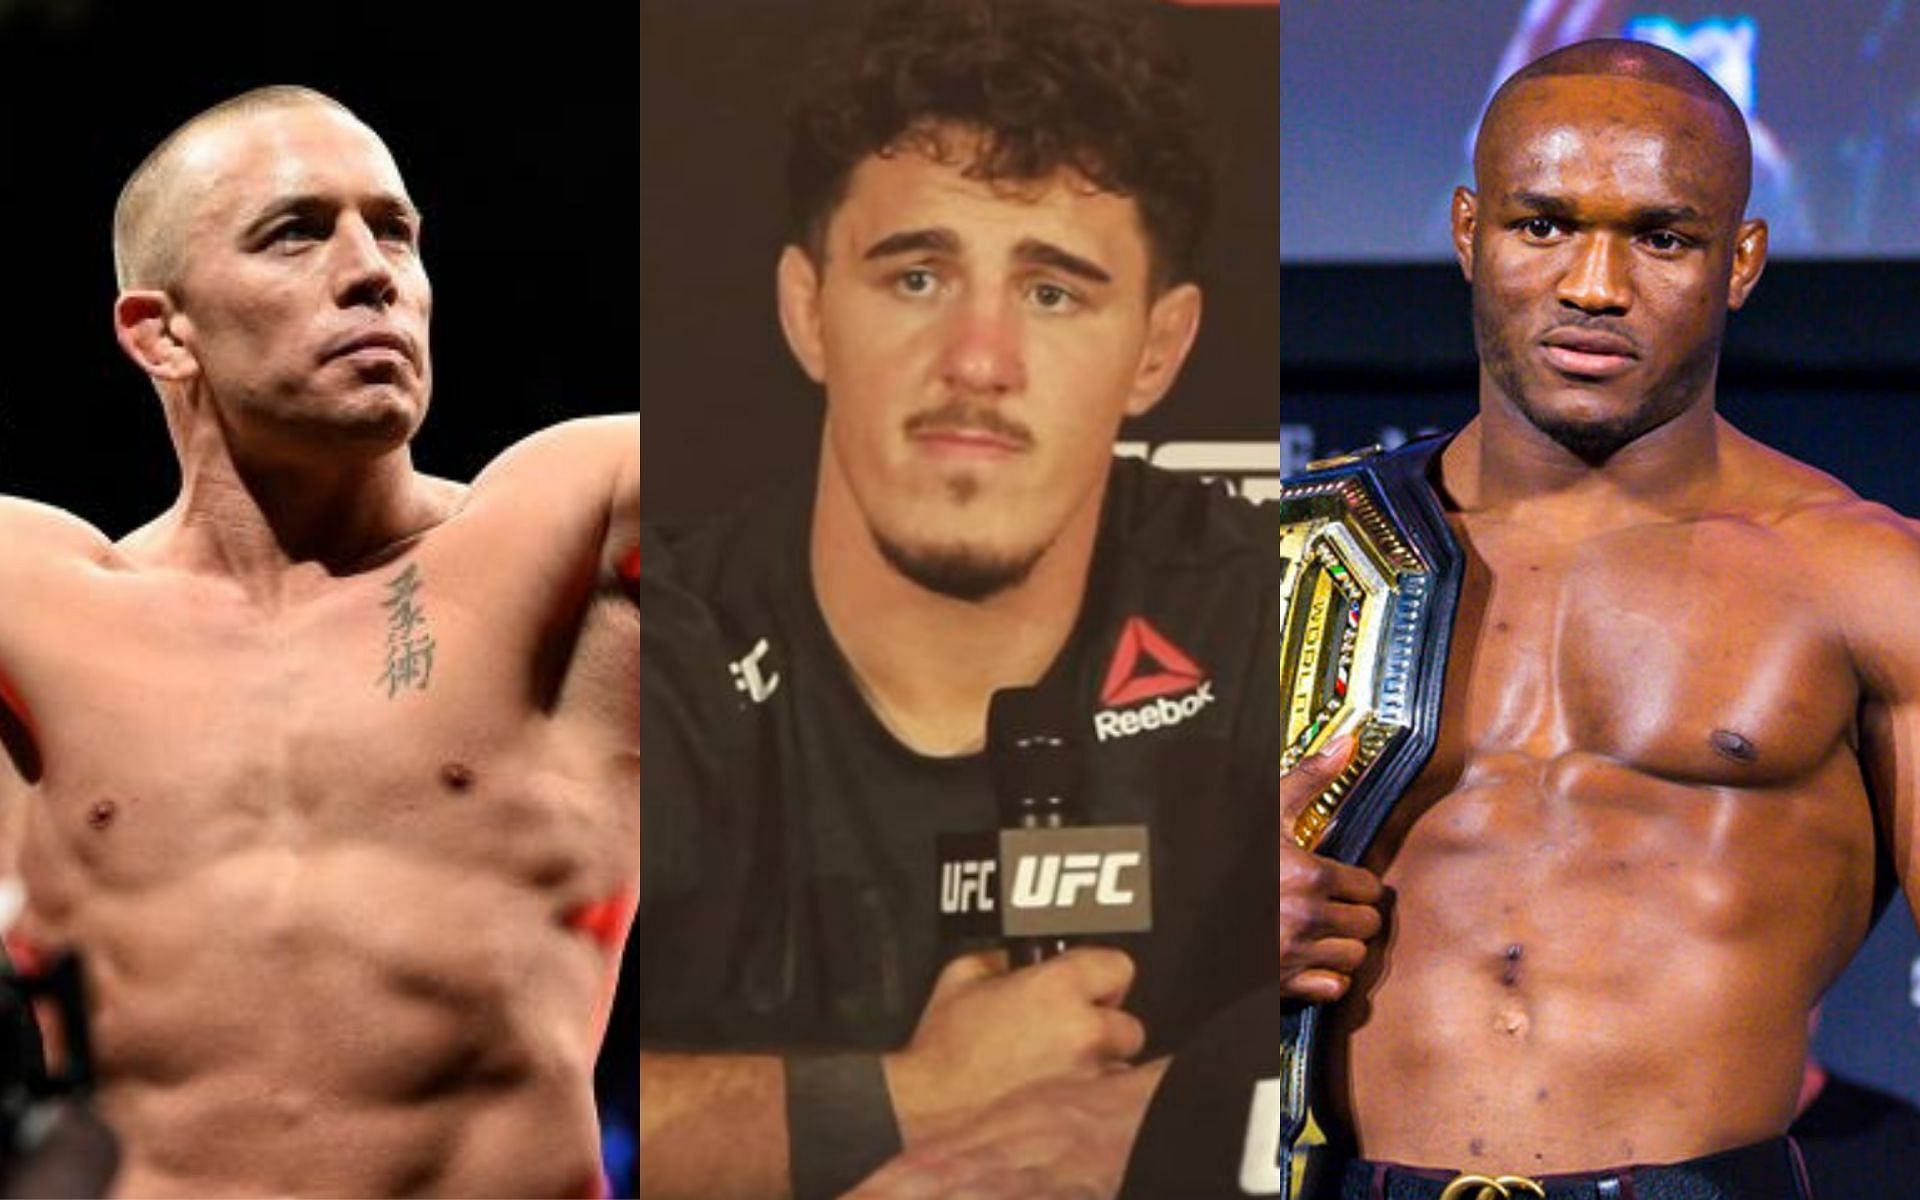 Georges St-Pierre (left. Image credit: UFC.com), Tom Aspinall (middle. Image credit: @tomaspinallofficial on Instagram), Kamaru Usman (right. Image credit: UFC.com)